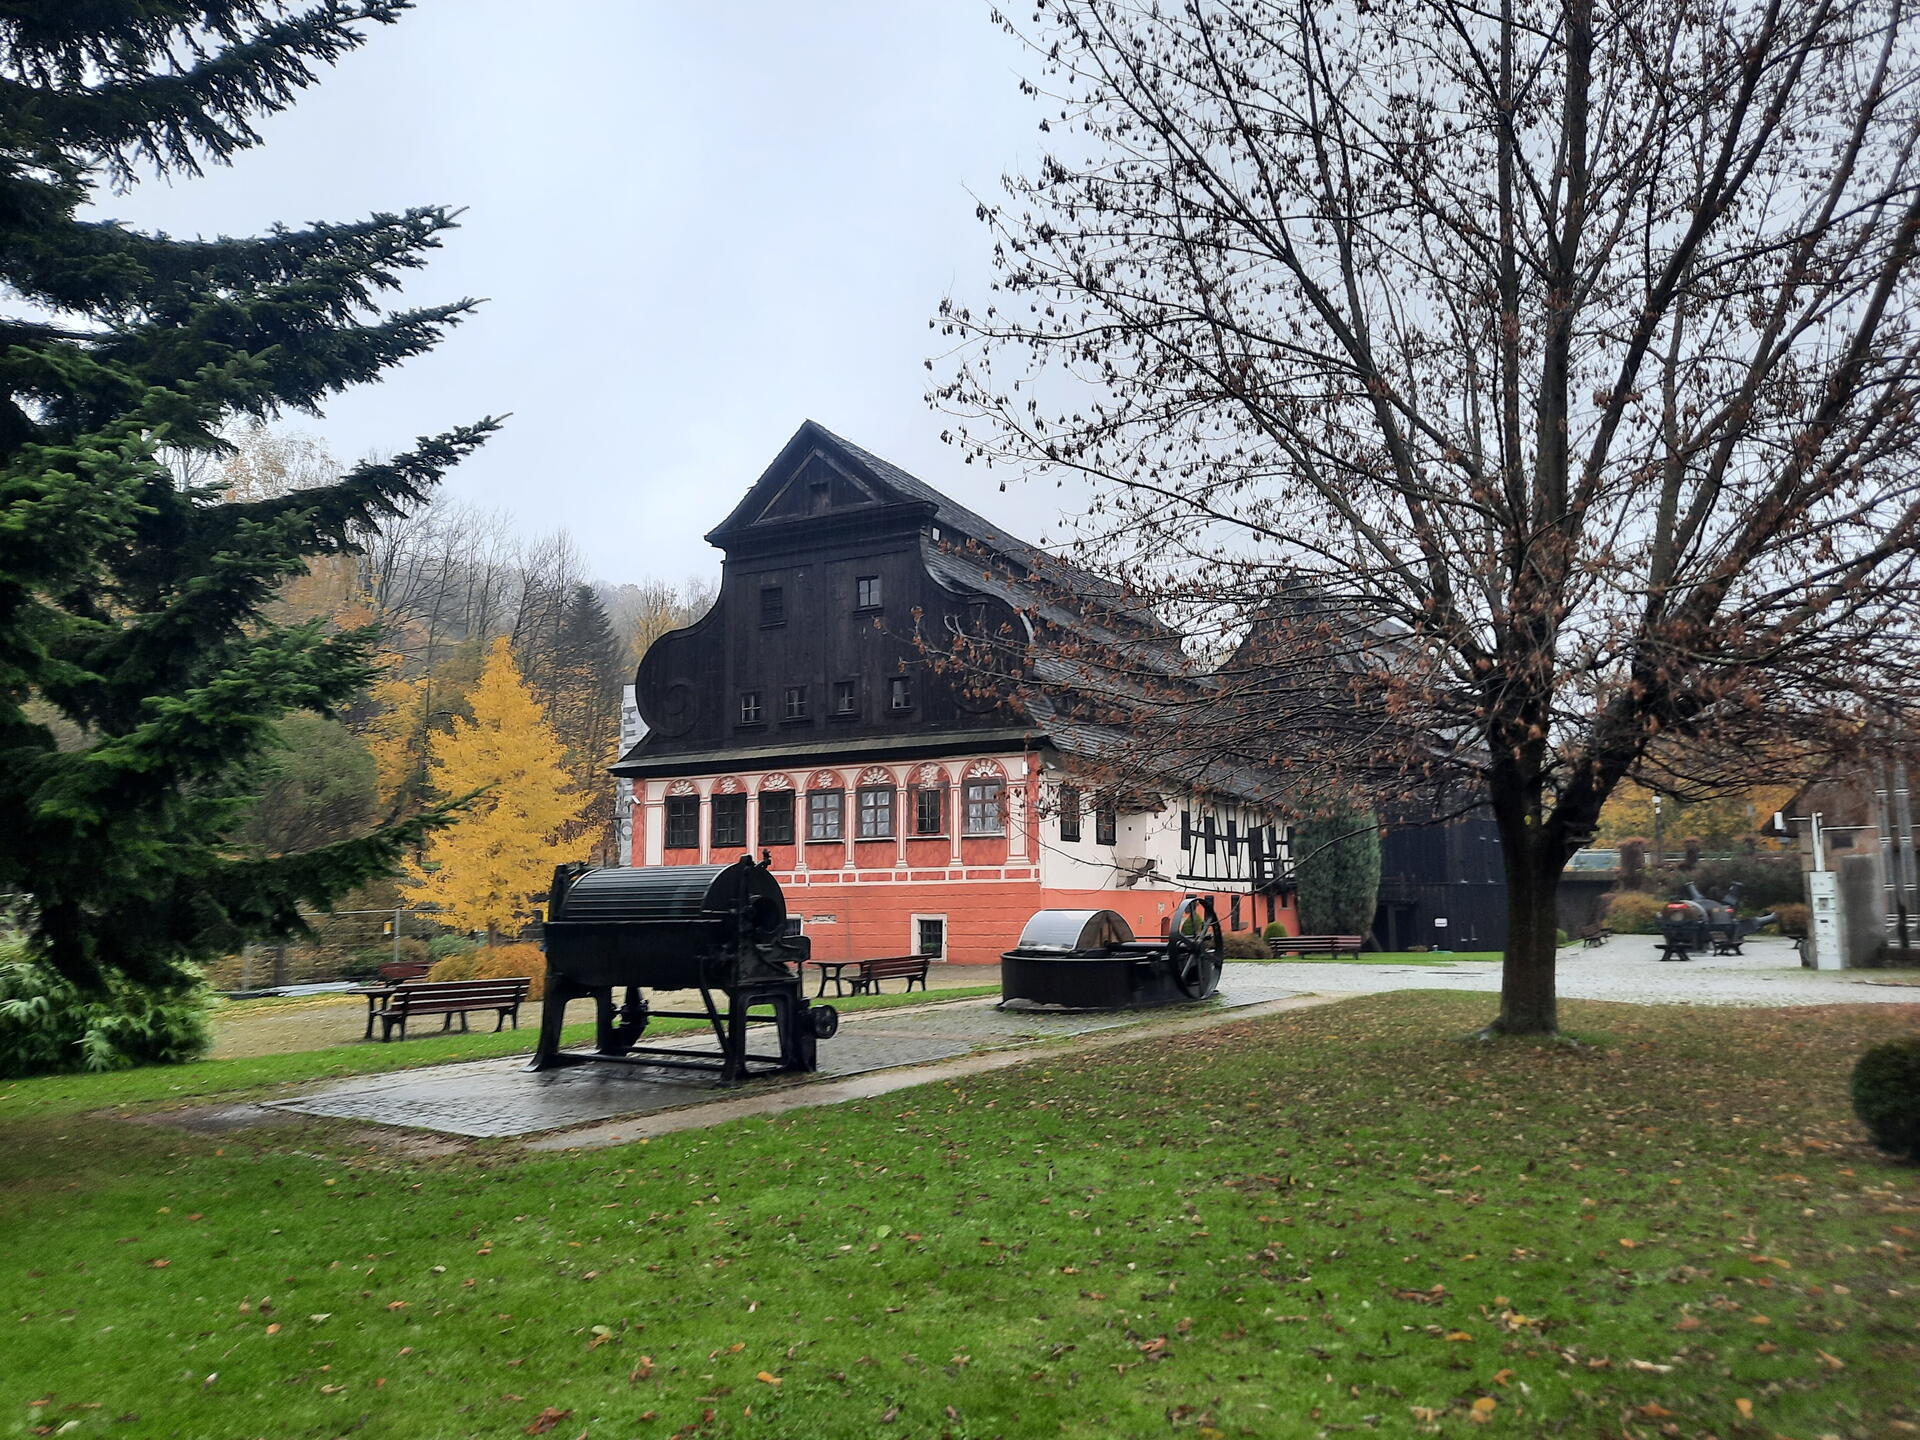 Muzeum papiernictwa Duszniki: Turistická atrakce do půlhodiny od hranic